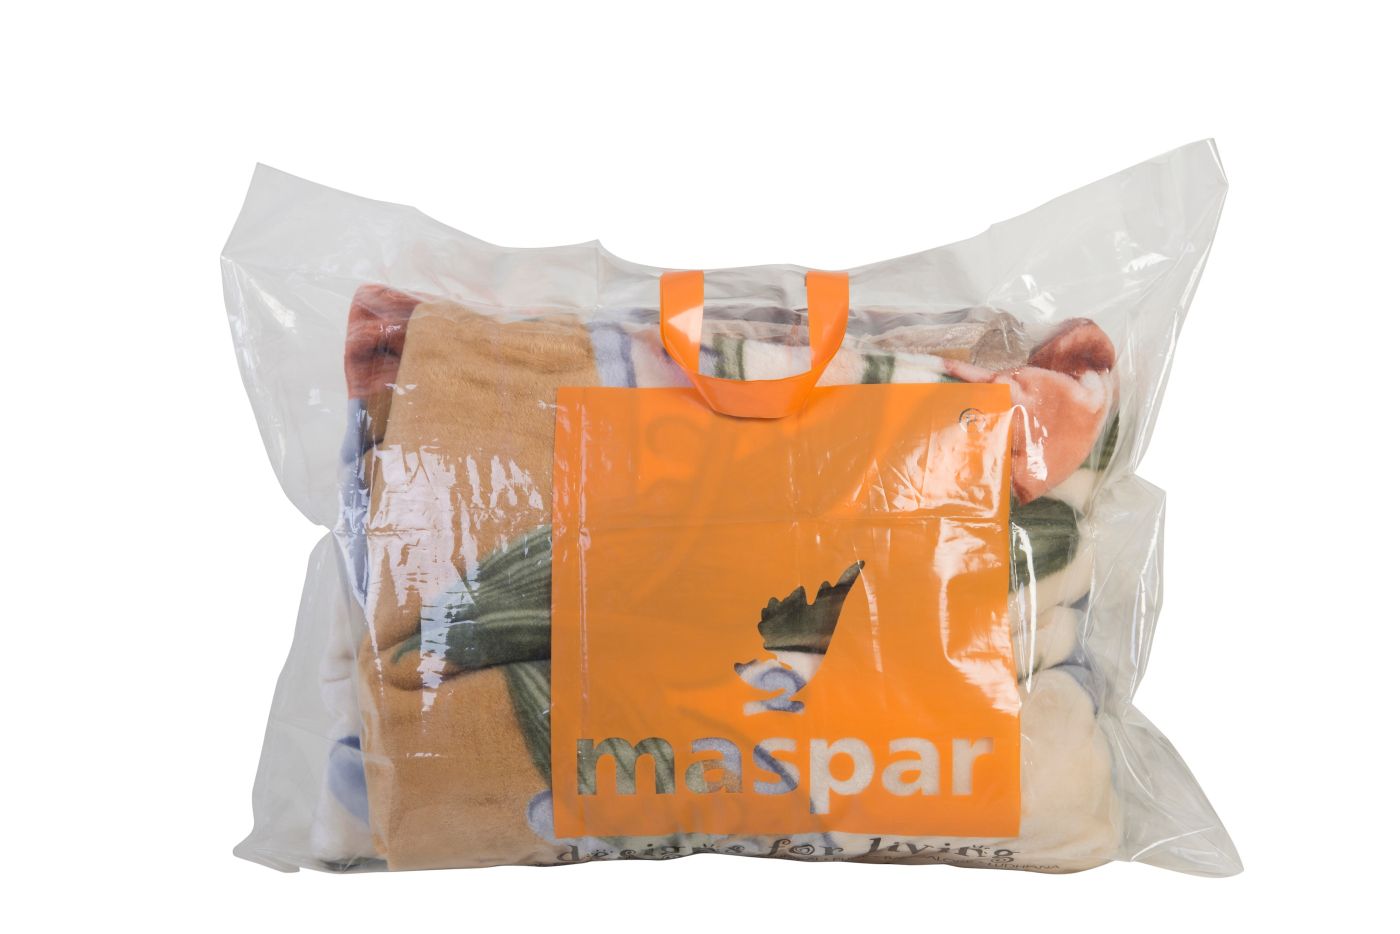 Top Bag Wholesalers in Hubli - बैग व्होलेसलेर्स, हुबली - Justdial